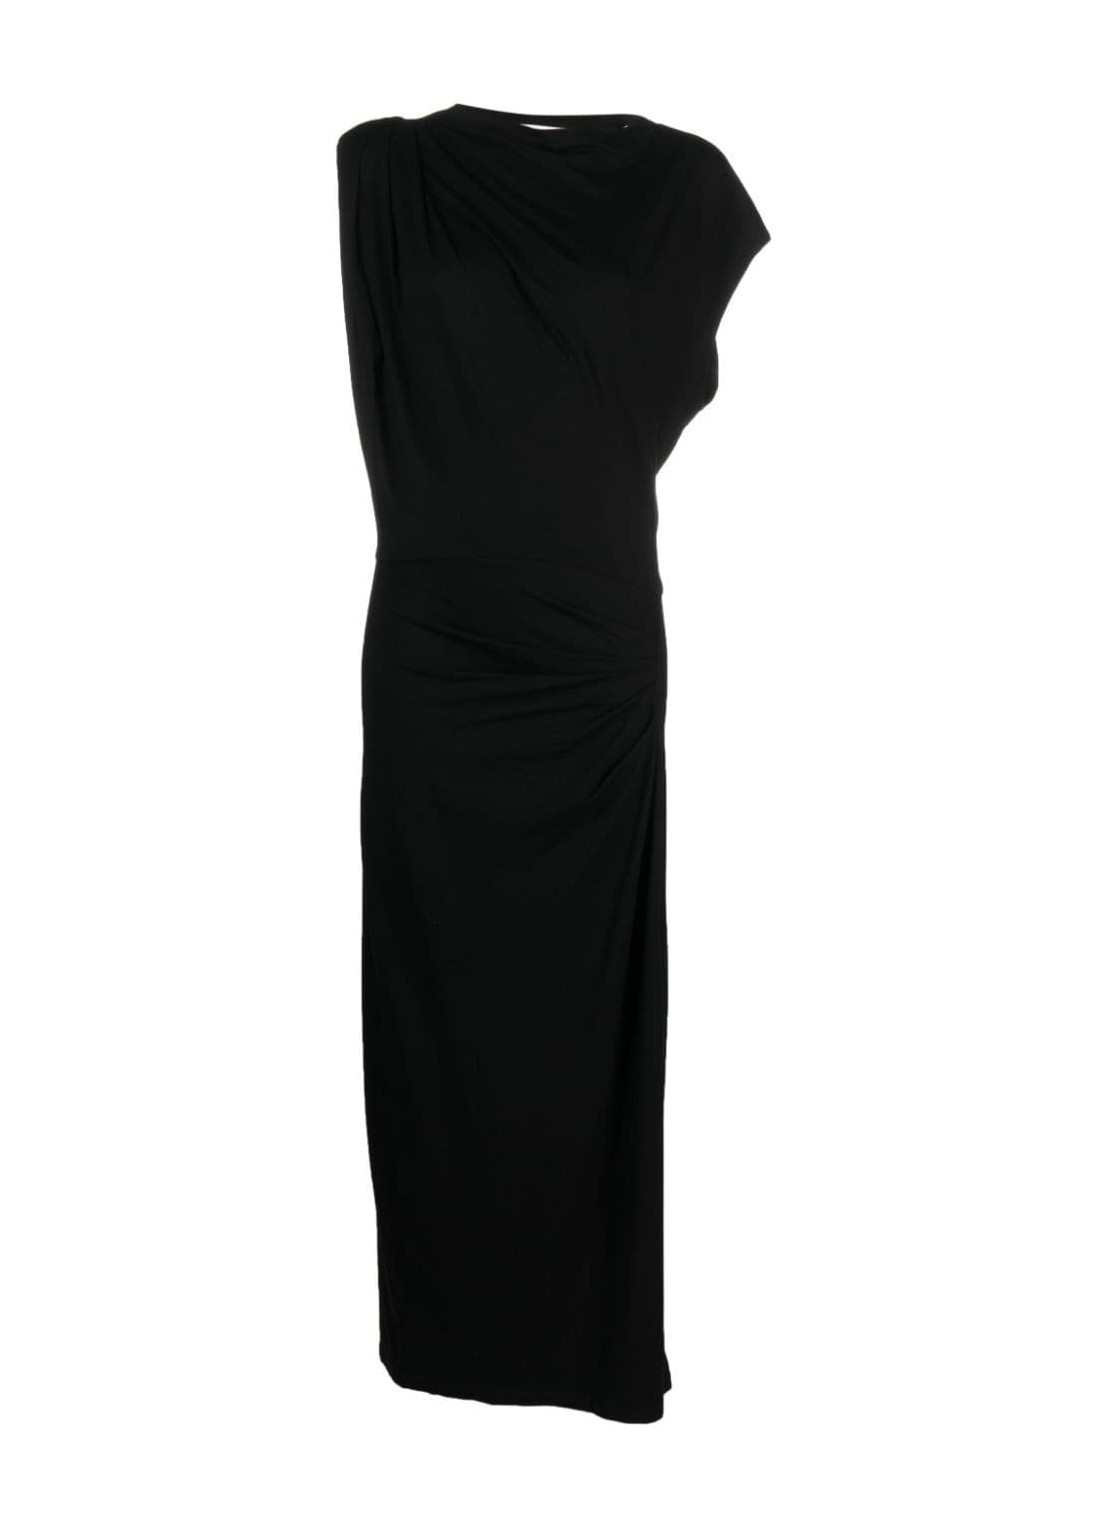 Vestido isabel marant dress woman naerys-gb 23aro0260faa3k21e 01bk talla negro
 